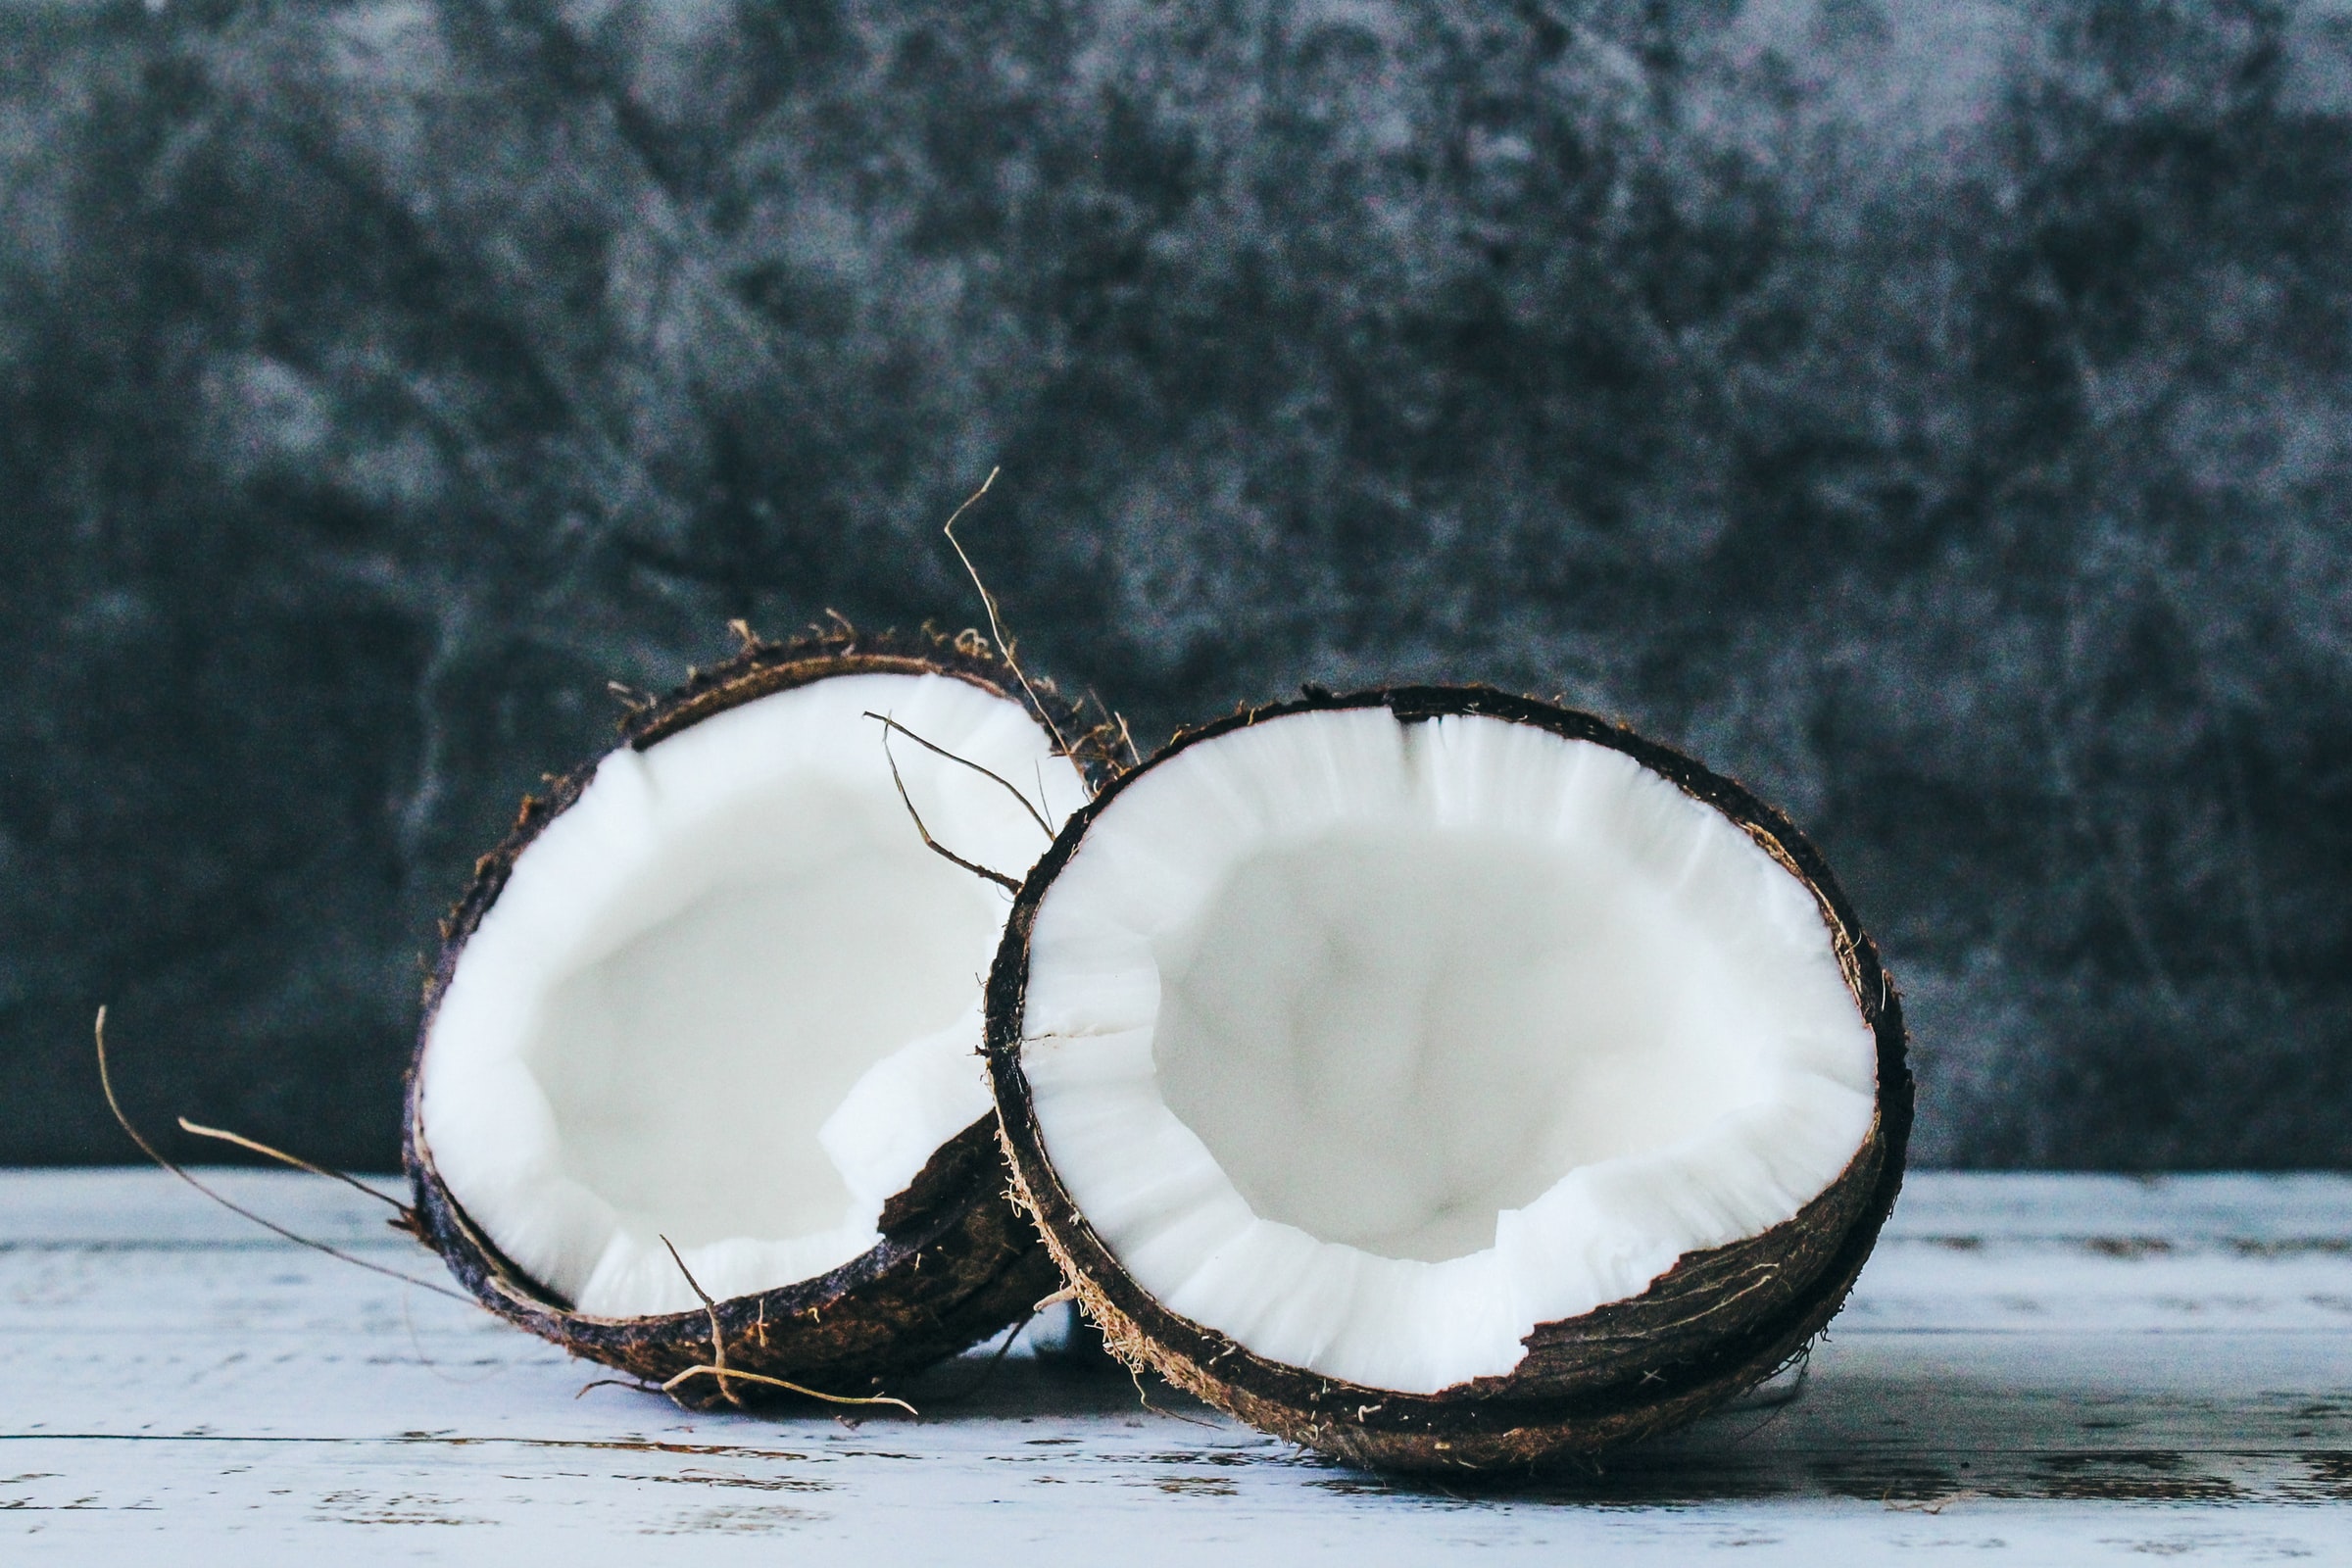 coconut benefits for under eye